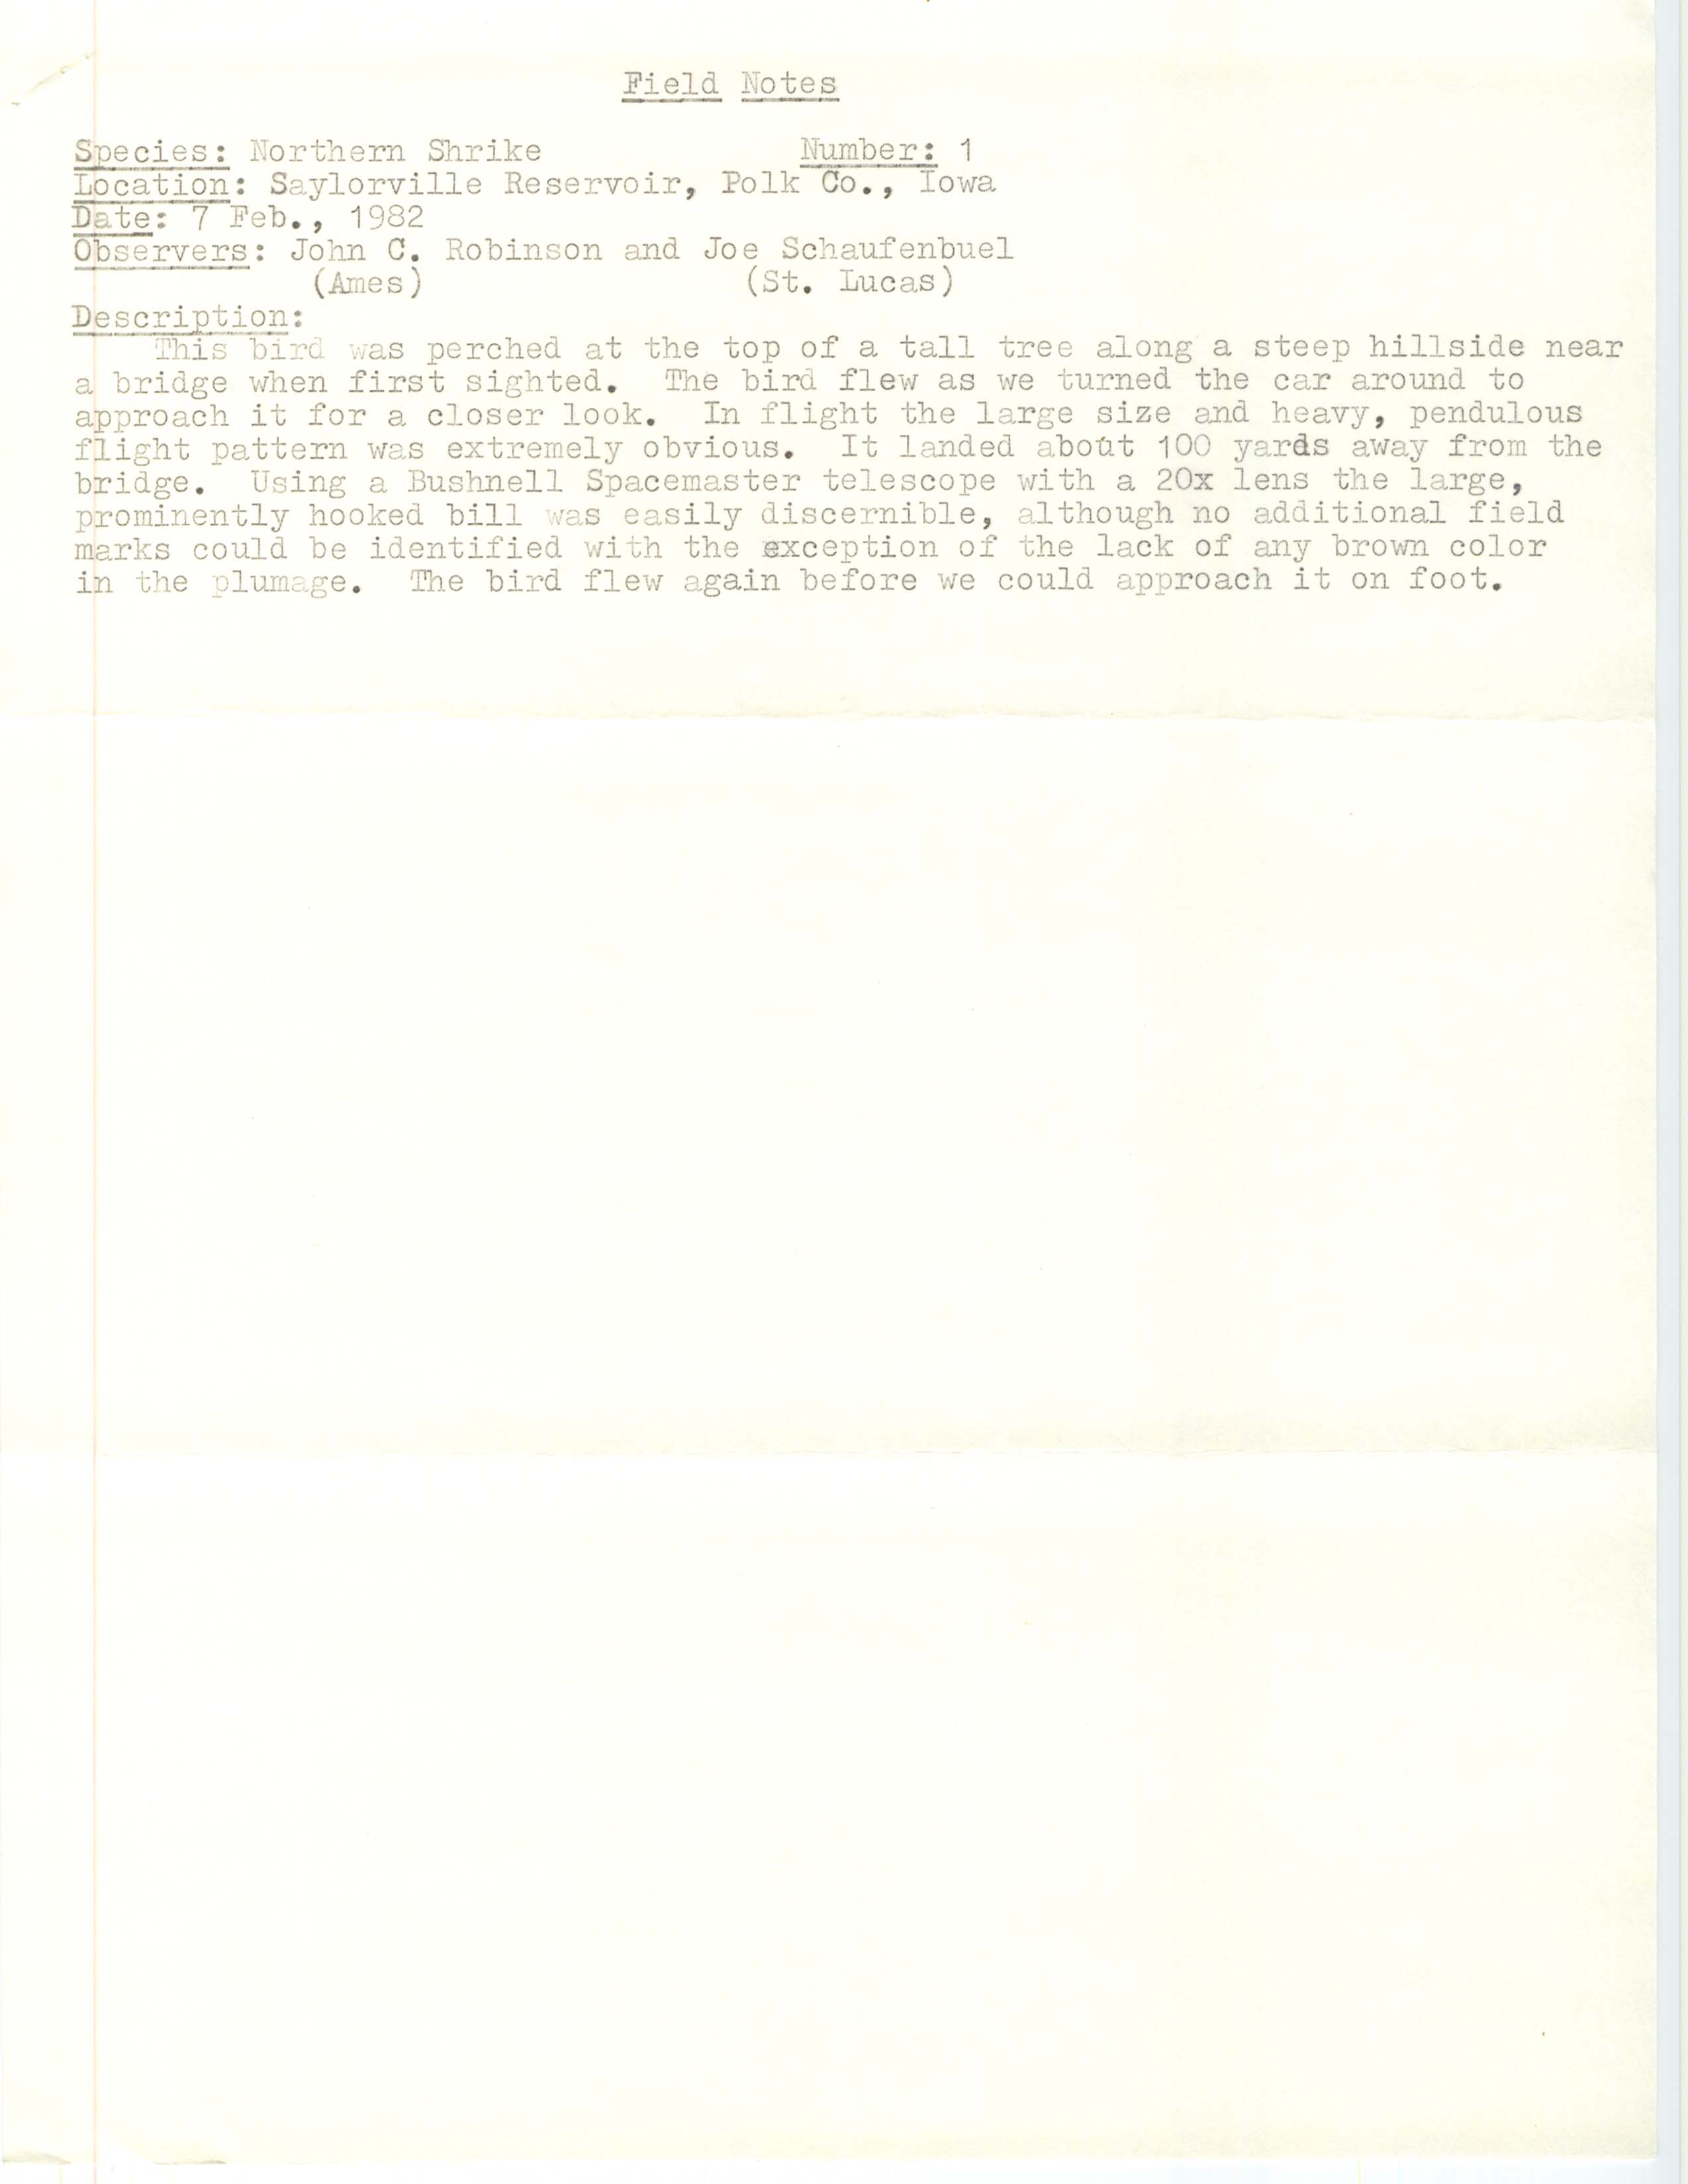 Rare bird documentation form for Northern Shrike at Saylorville Reservoir, 1982